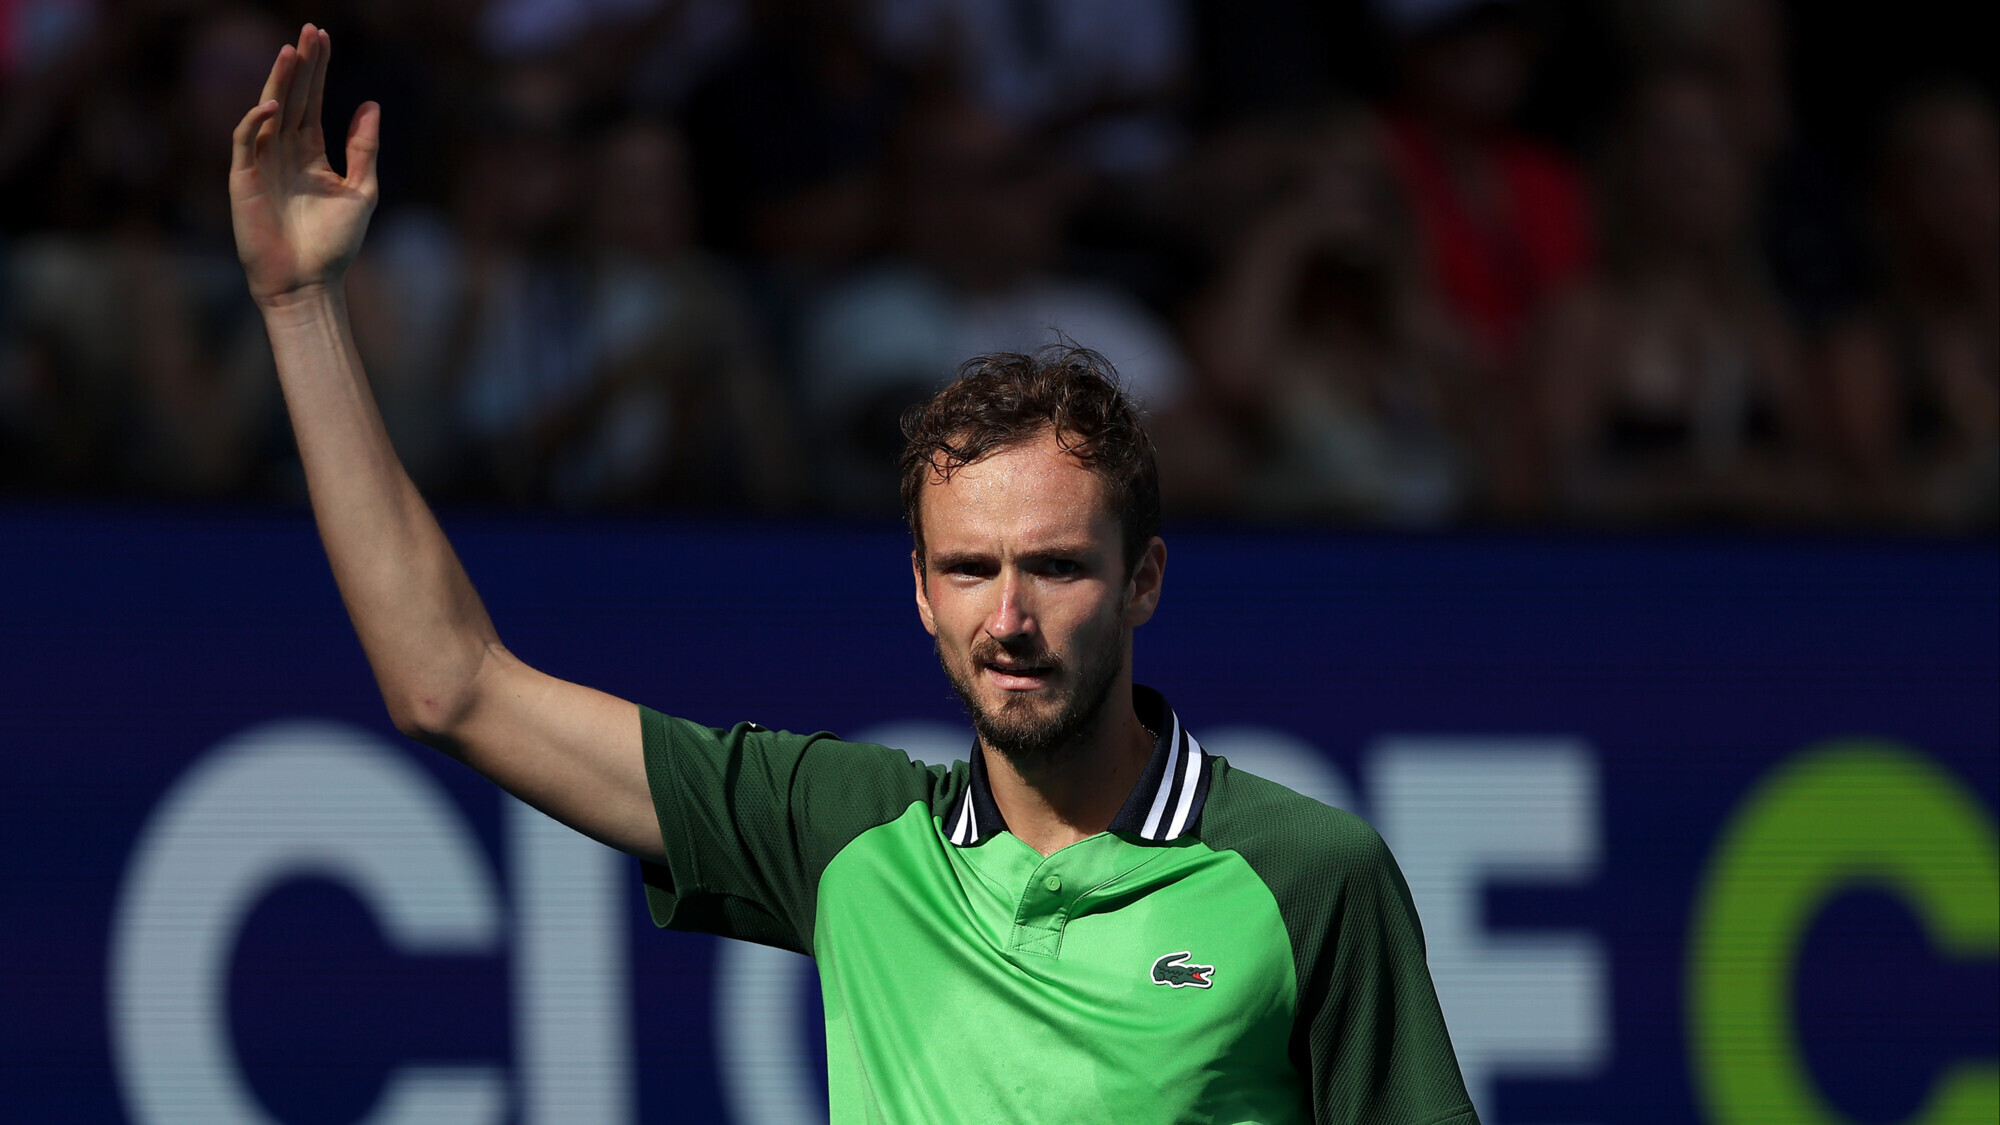 Daniil Medvedev derrotó a Dominic Thiem y obtuvo el ATP Finals en Londres